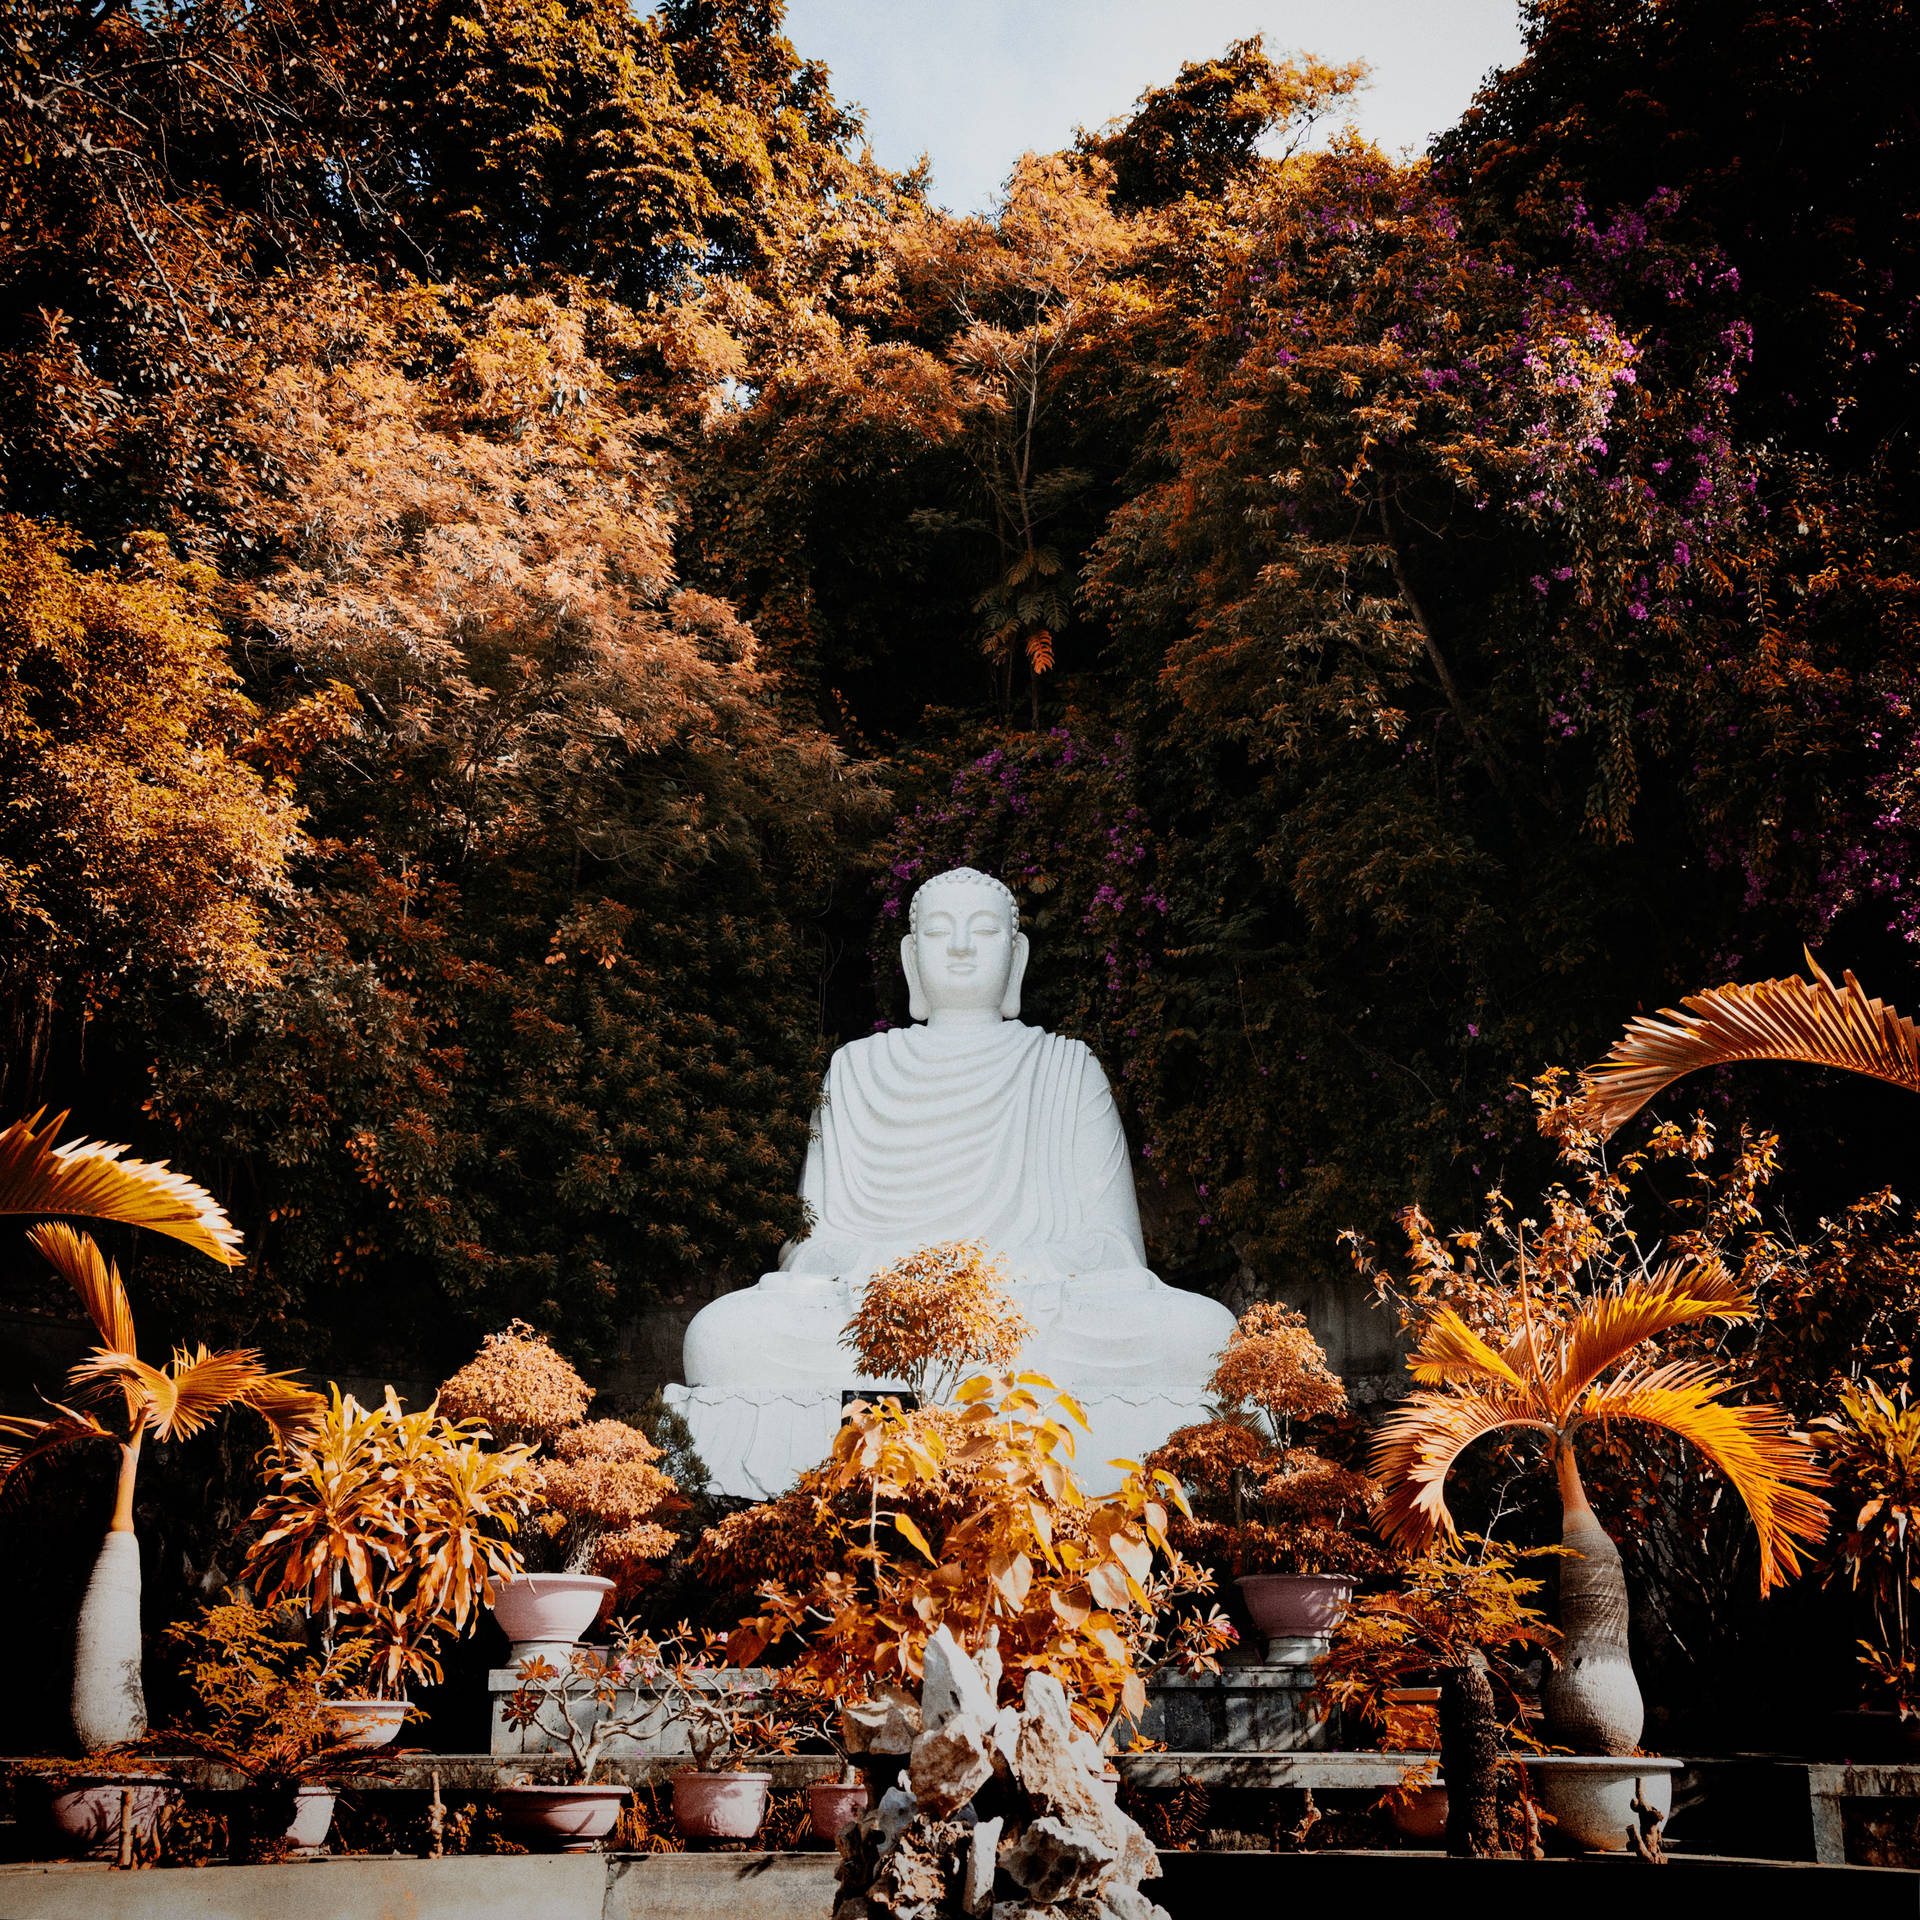 A peaceful White Buddha Statue in Nature Wallpaper